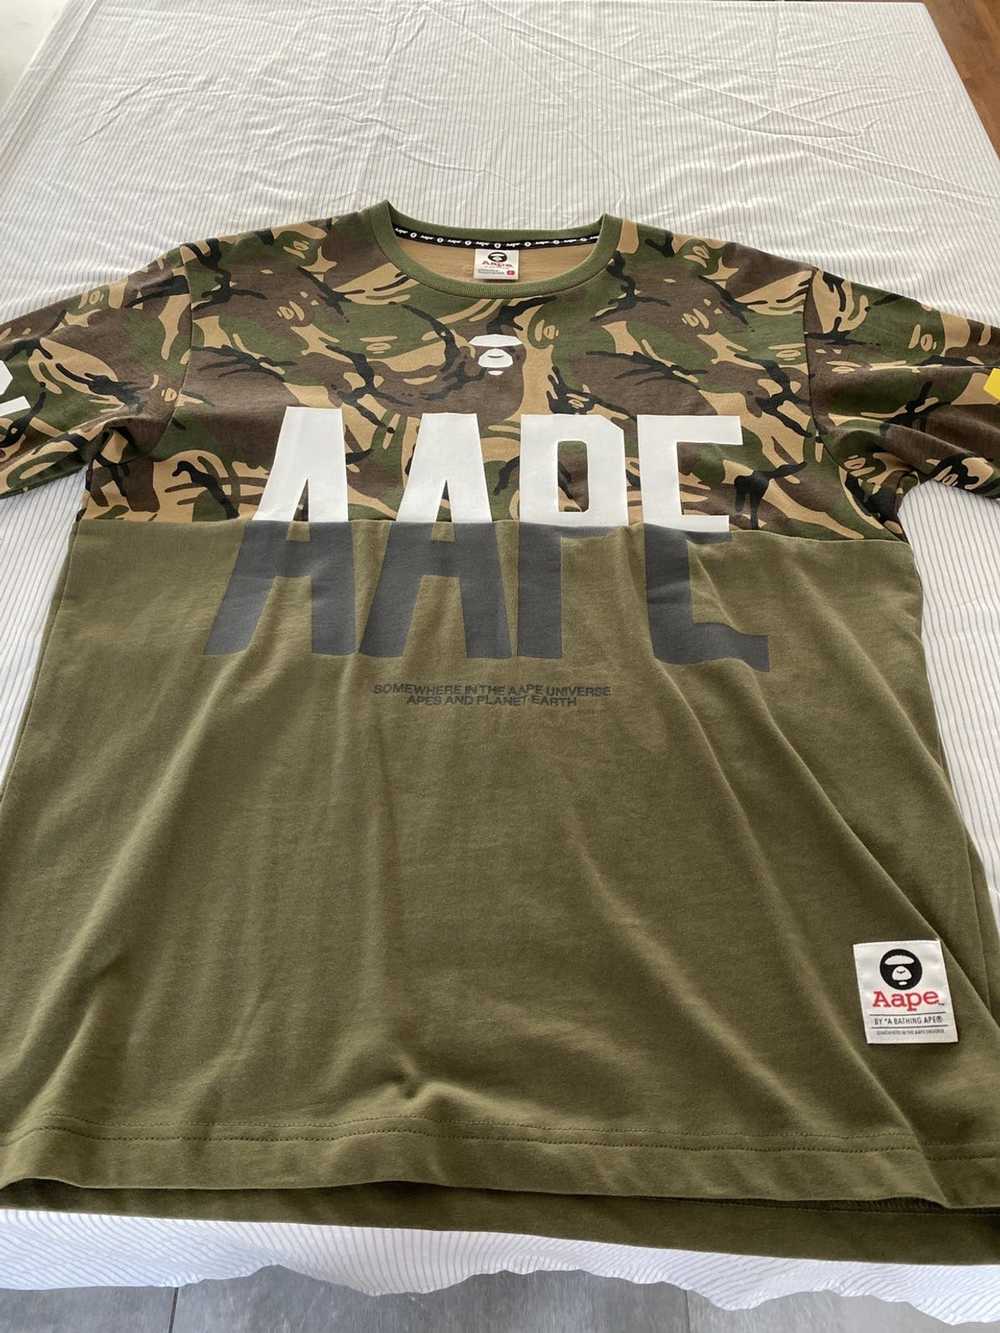 Aape Camp Tshirts - image 1